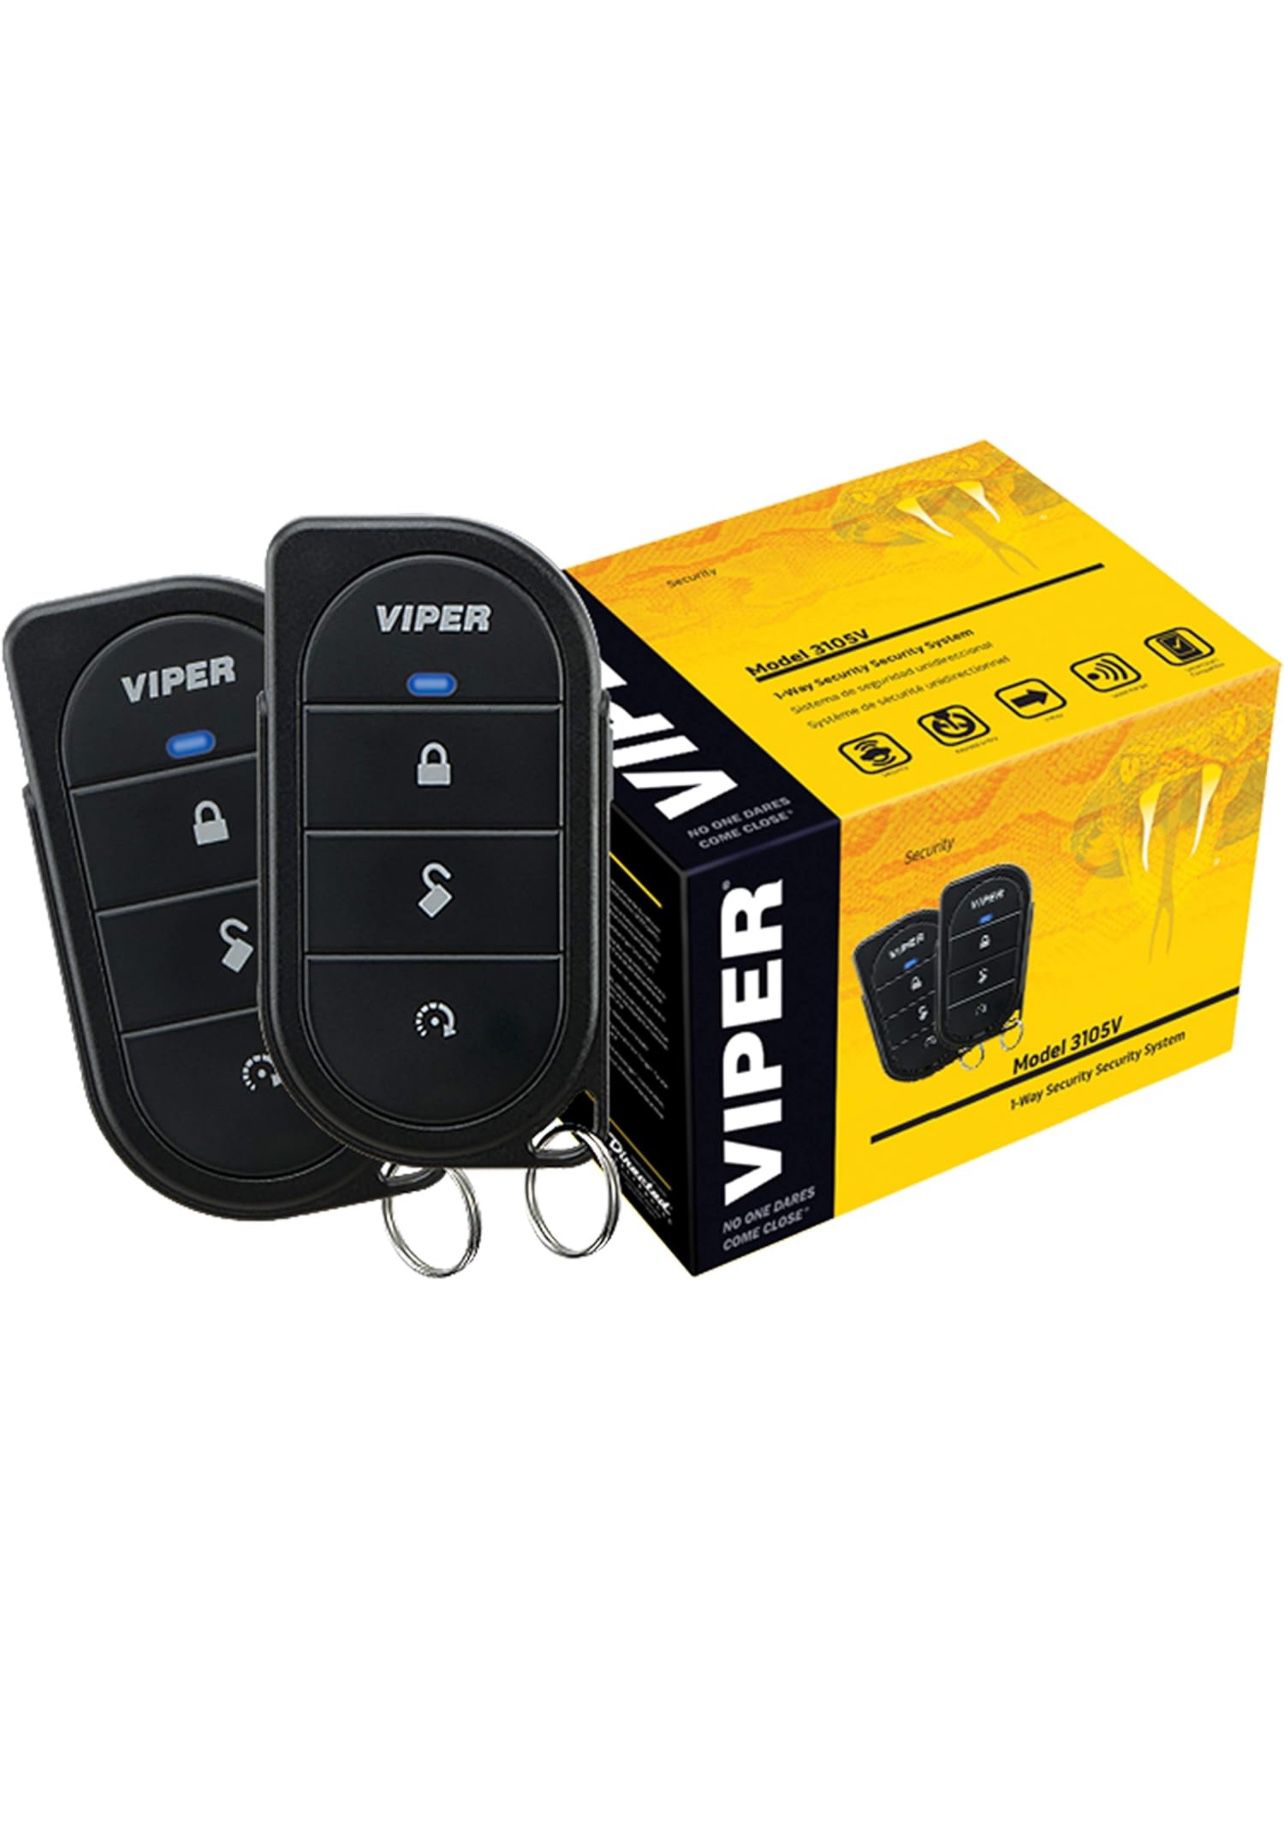 Viper 350 PLUS 3105V 1-Way Car Alarm Keyless Entry